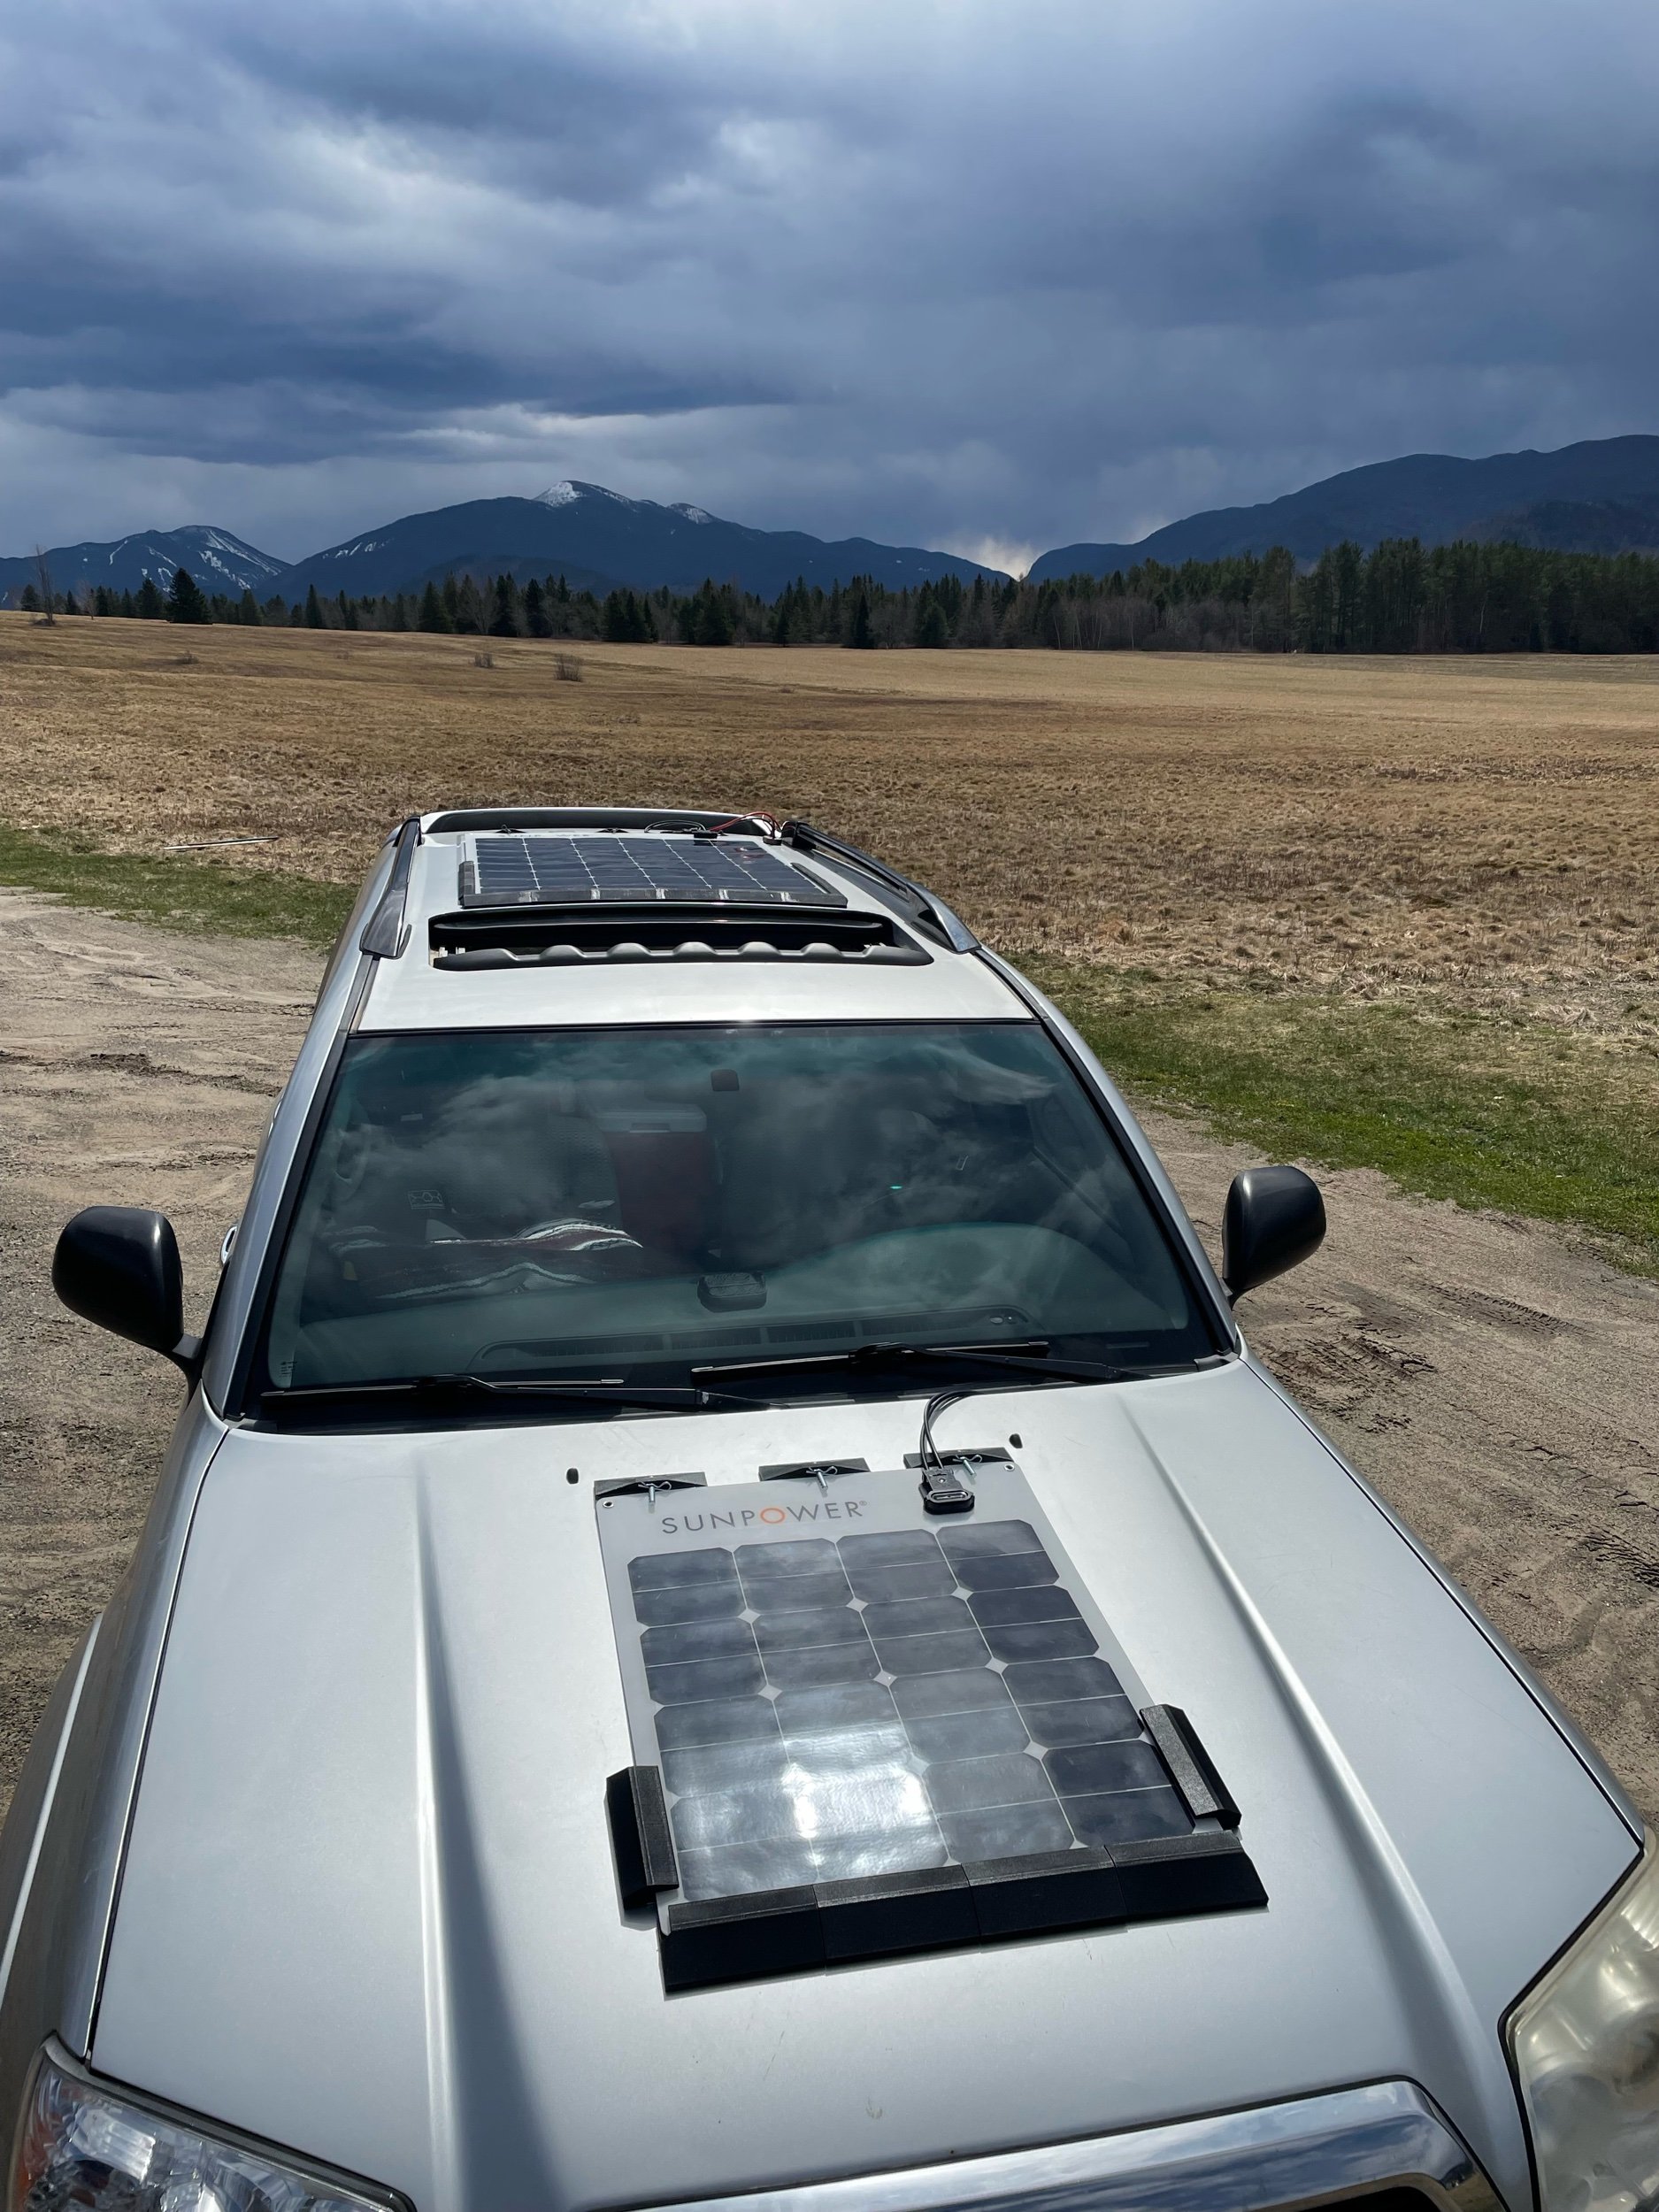 Car hood solar panel mounts